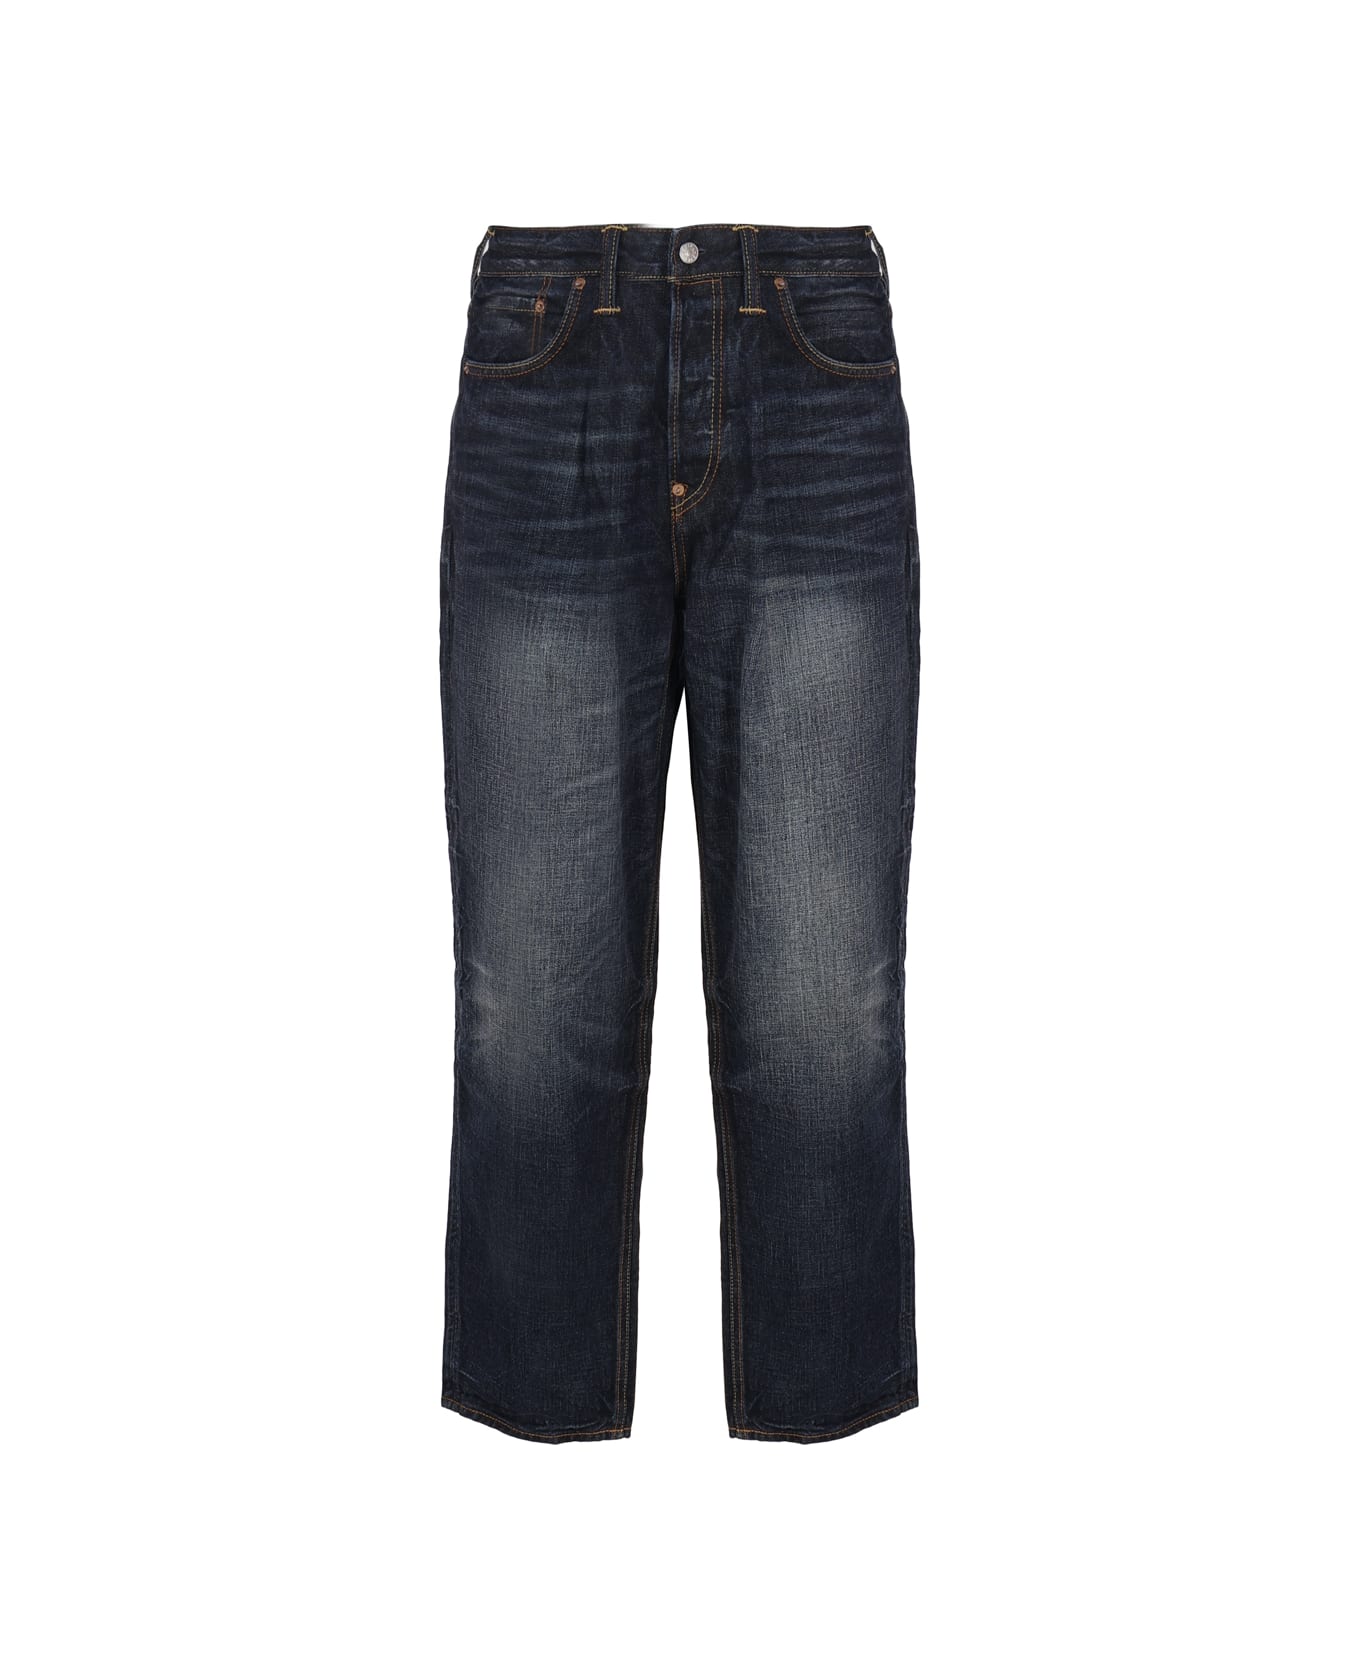 Evisu Cotton Denim Jeans - Blue denim